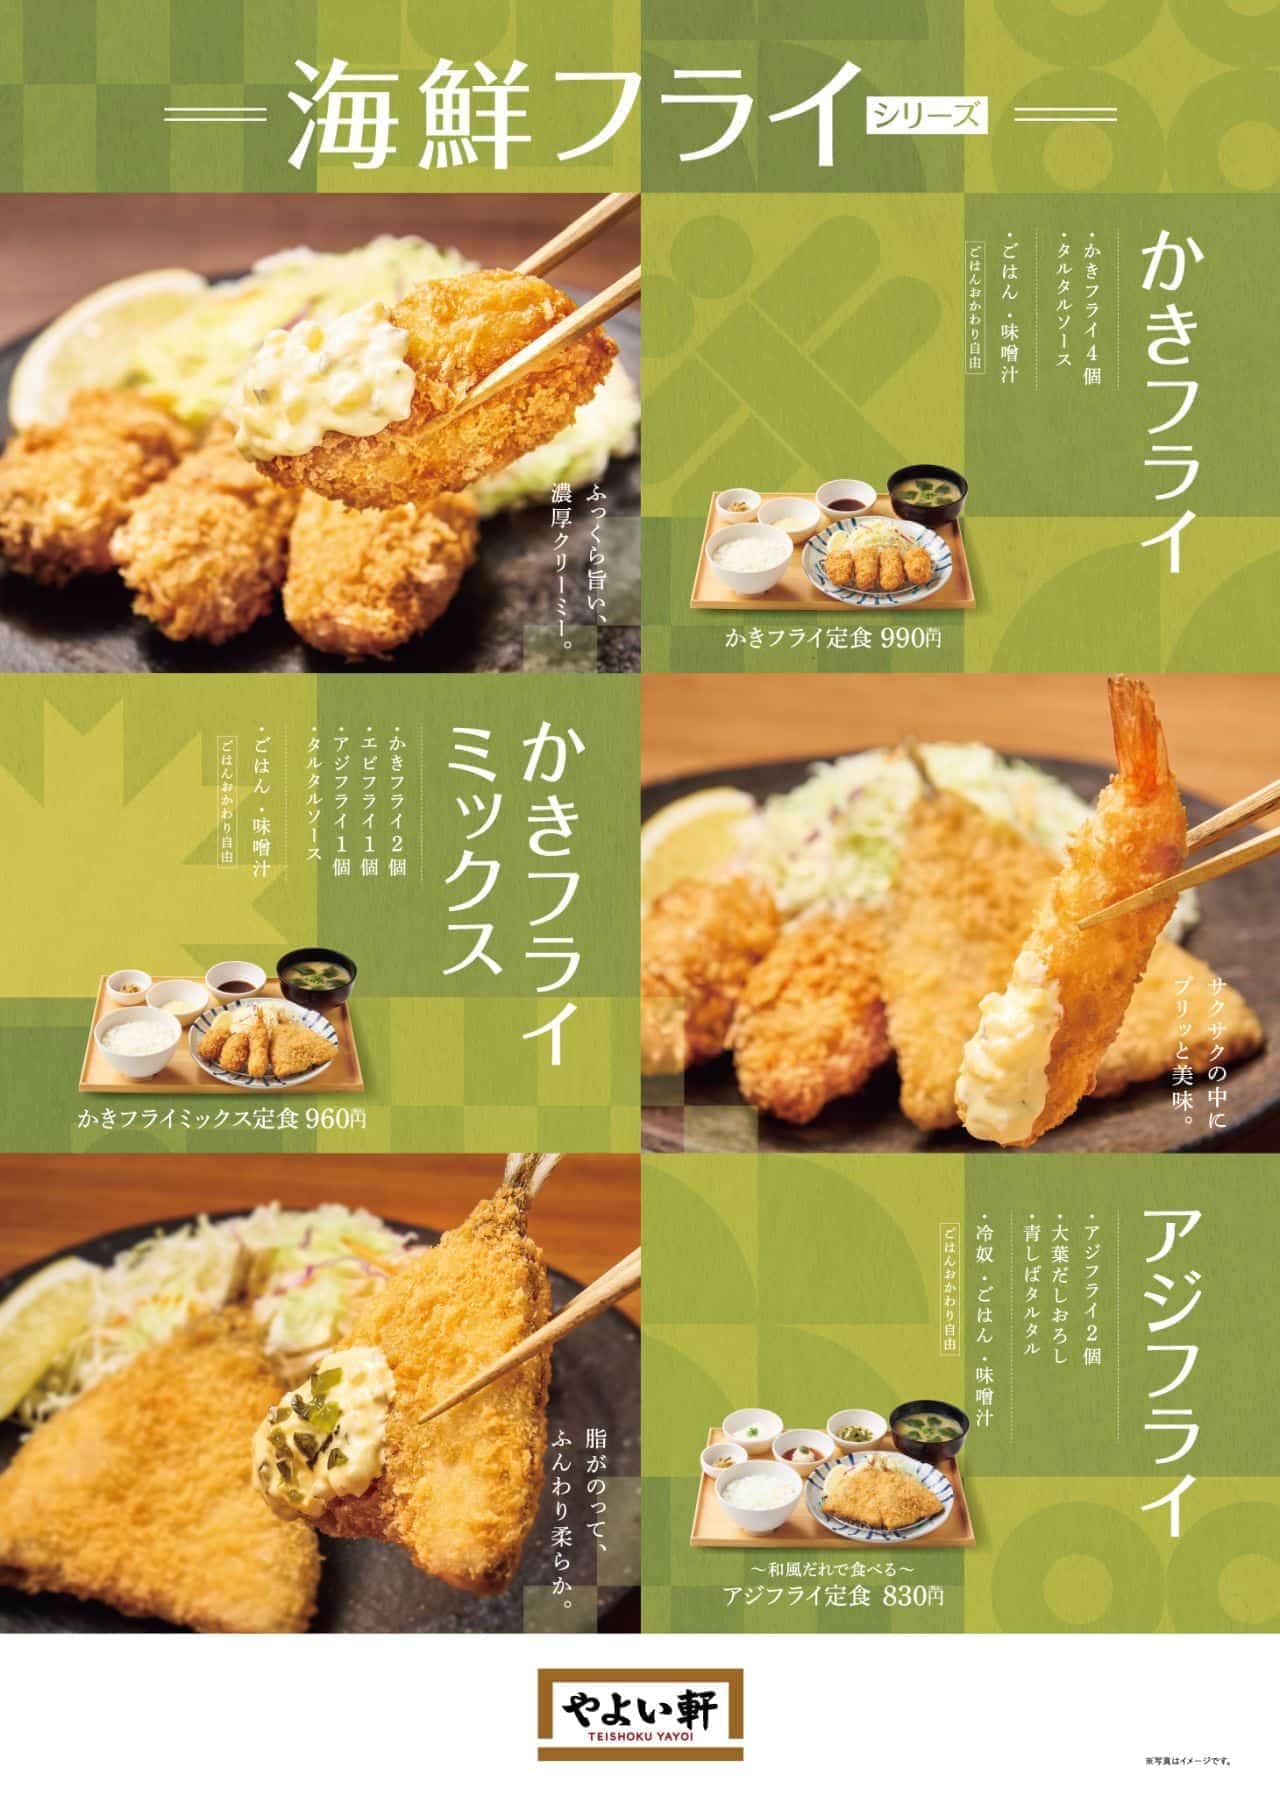 Yayoiken "Fried Oyster Mix Set Meal", "Fried Oyster Set Meal", "Fried Horse Mackerel Set Meal with Japanese Sauce".